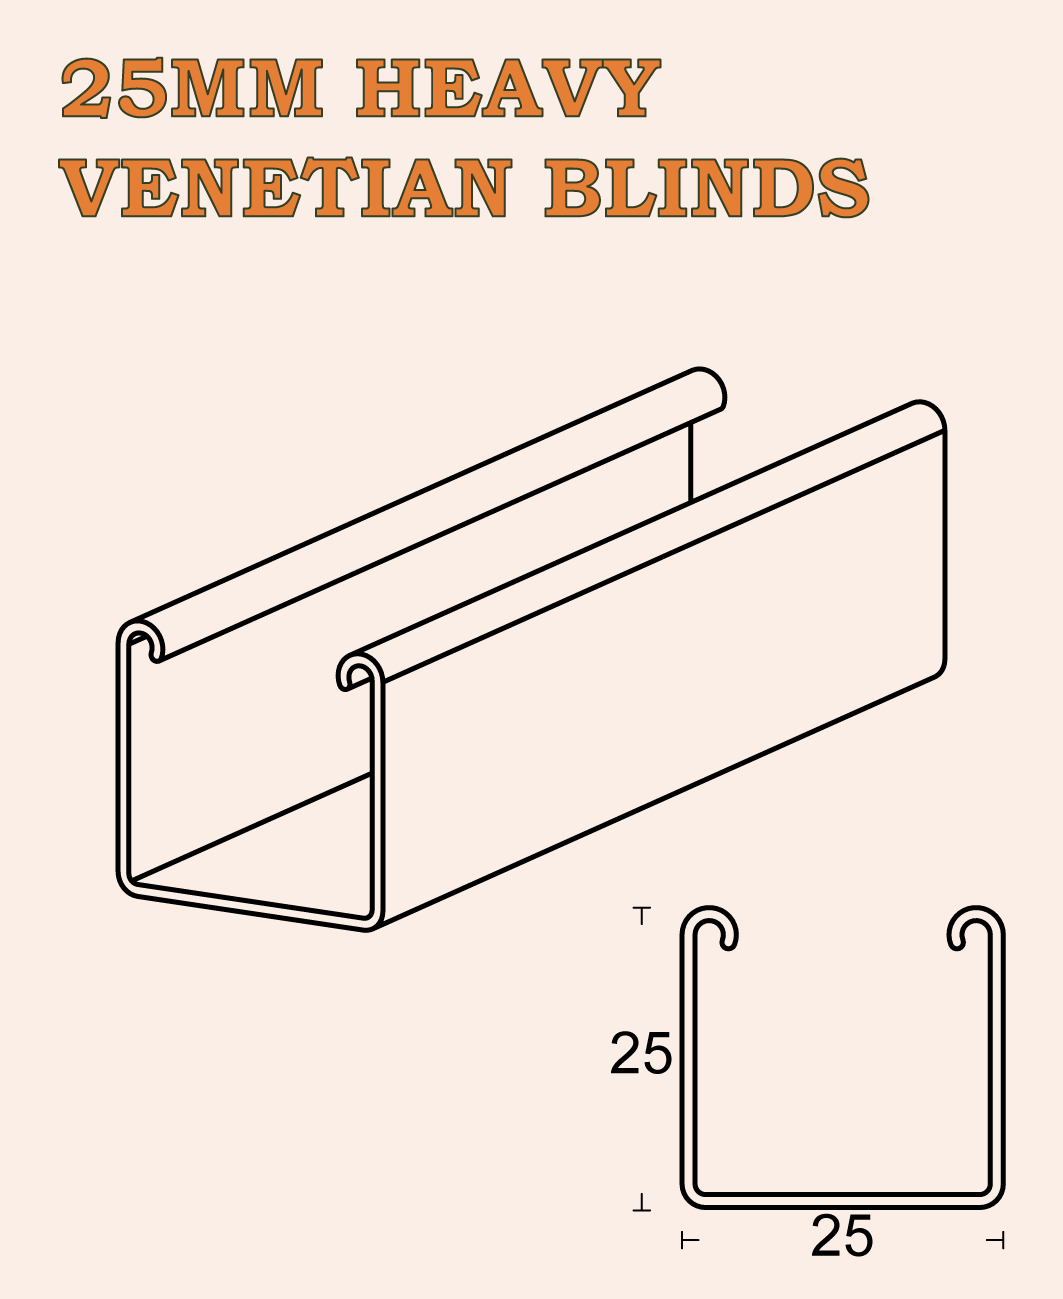 25MM HEAVY VENETIAN BLINDS